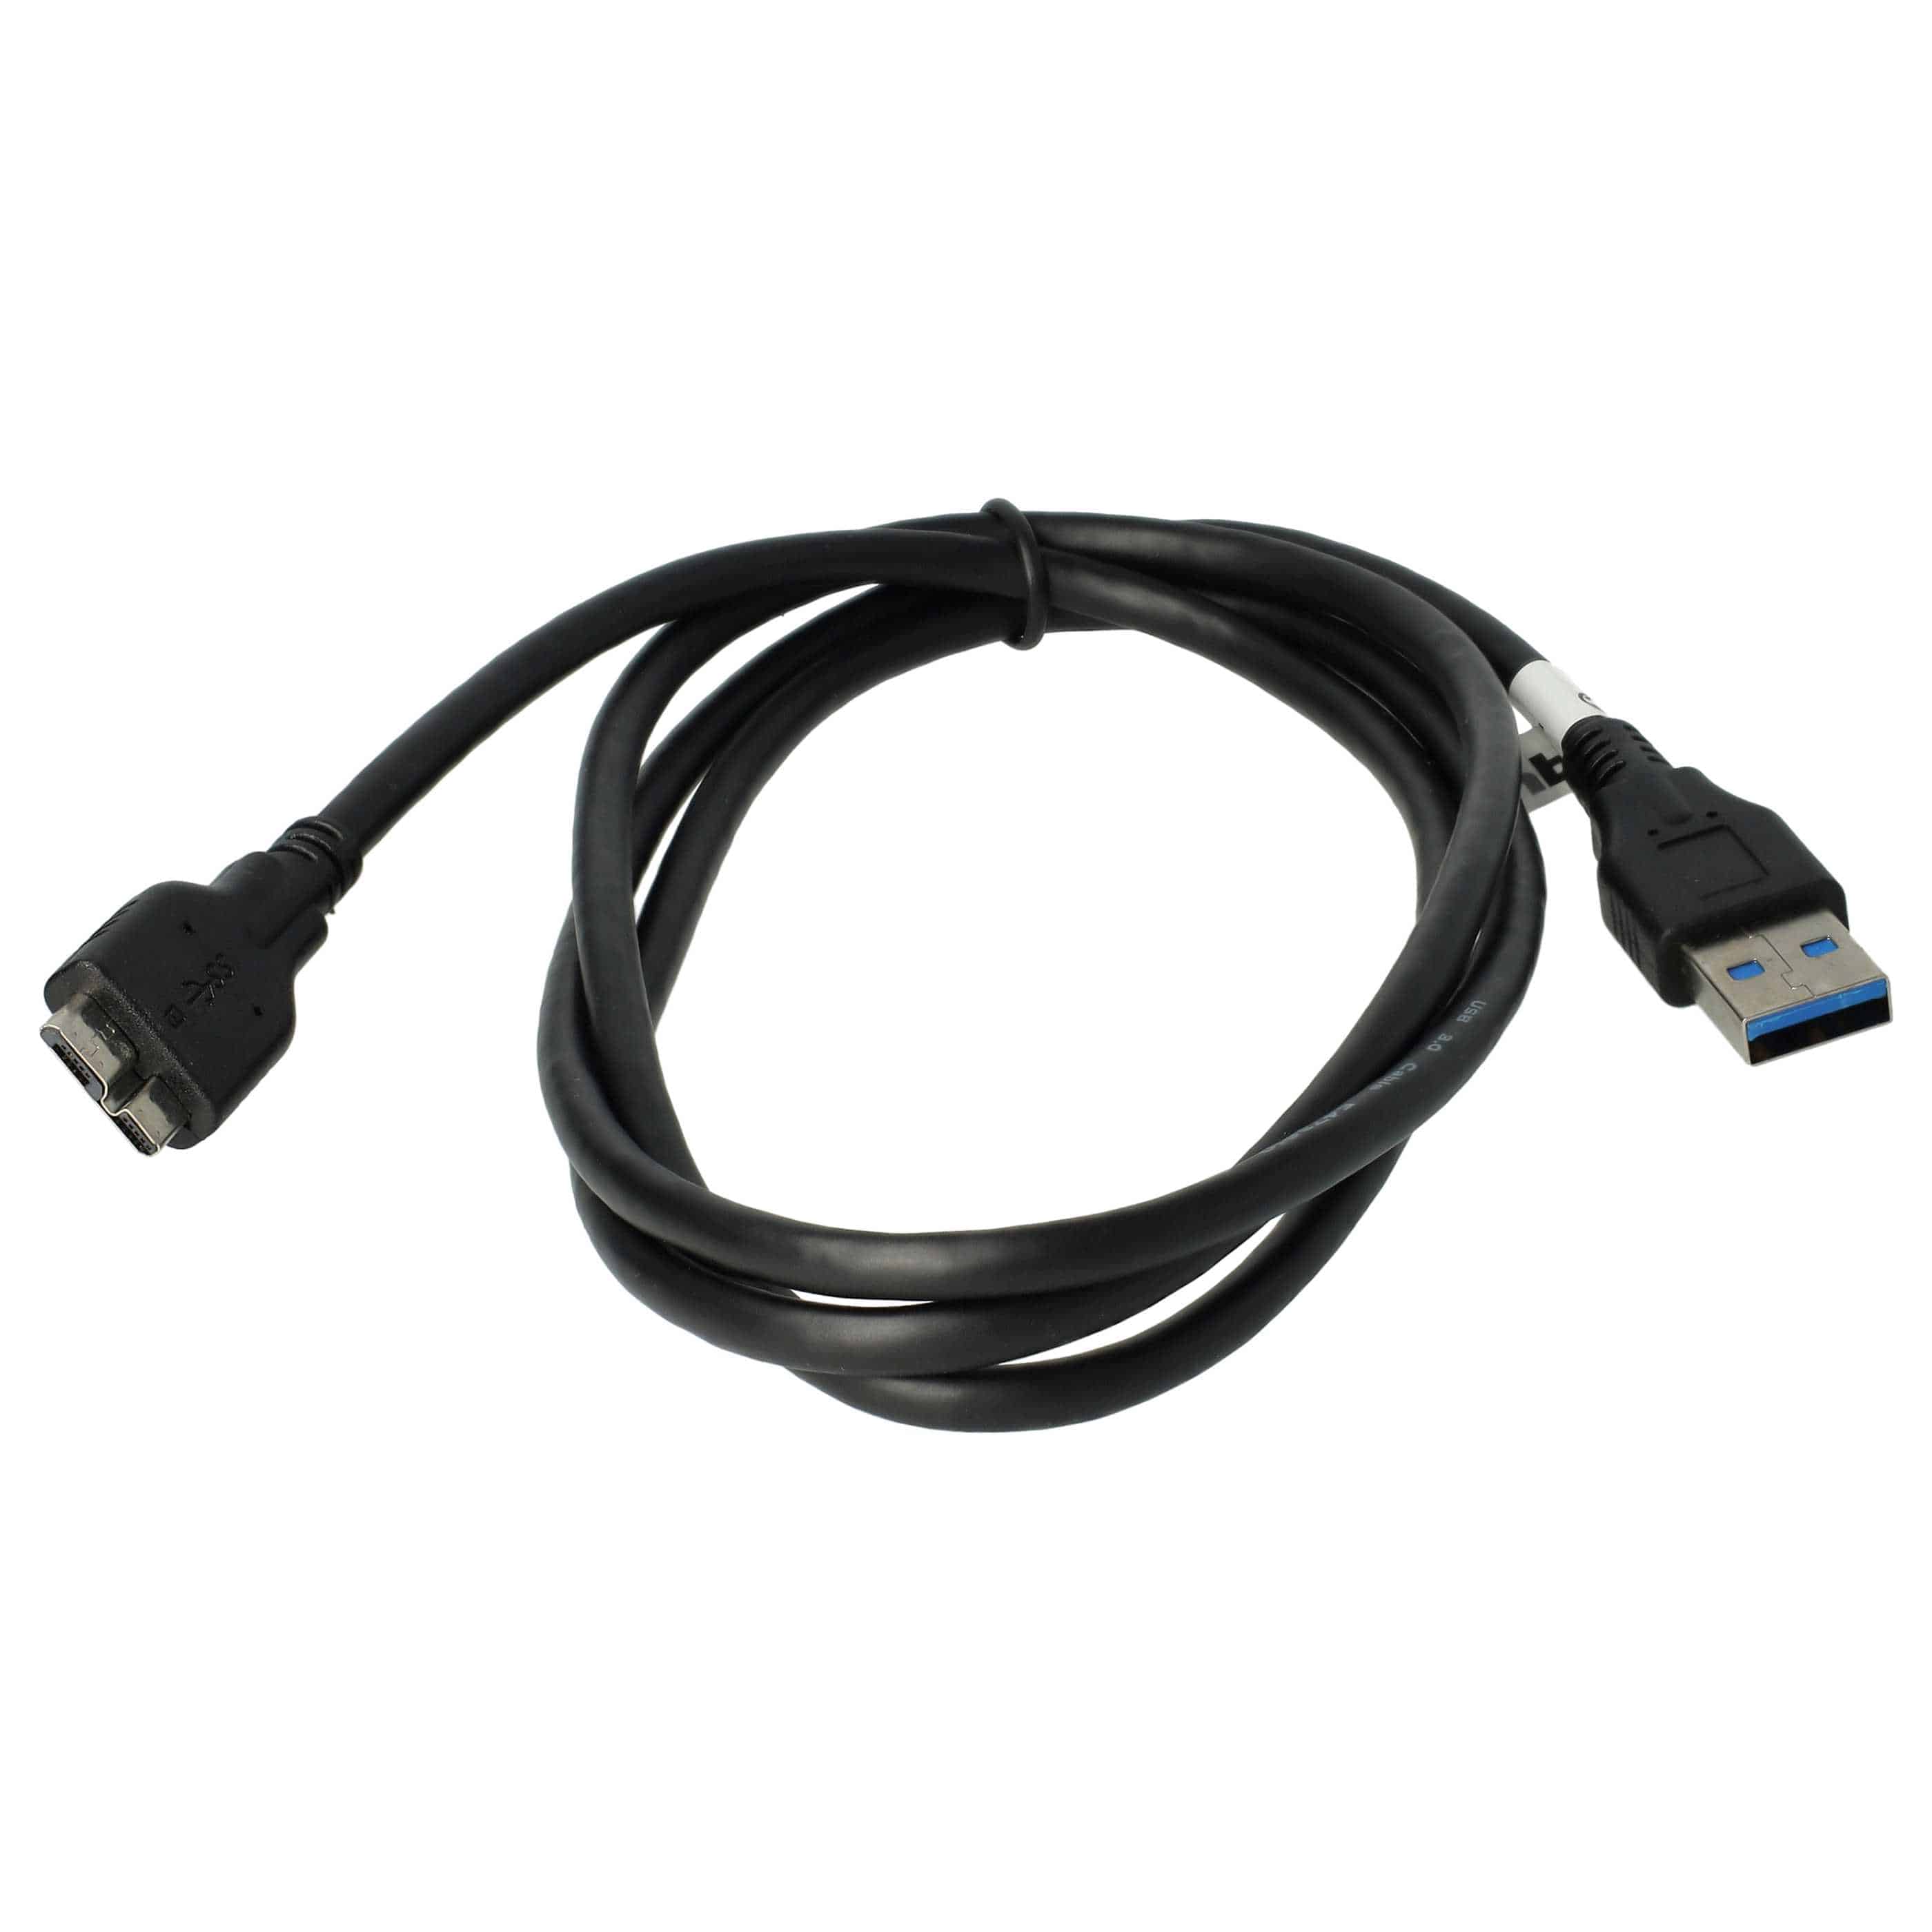 Kabel USB do aparatu Nikon zamiennik Nikon UC-E14, UC-E22 - 150 cm 